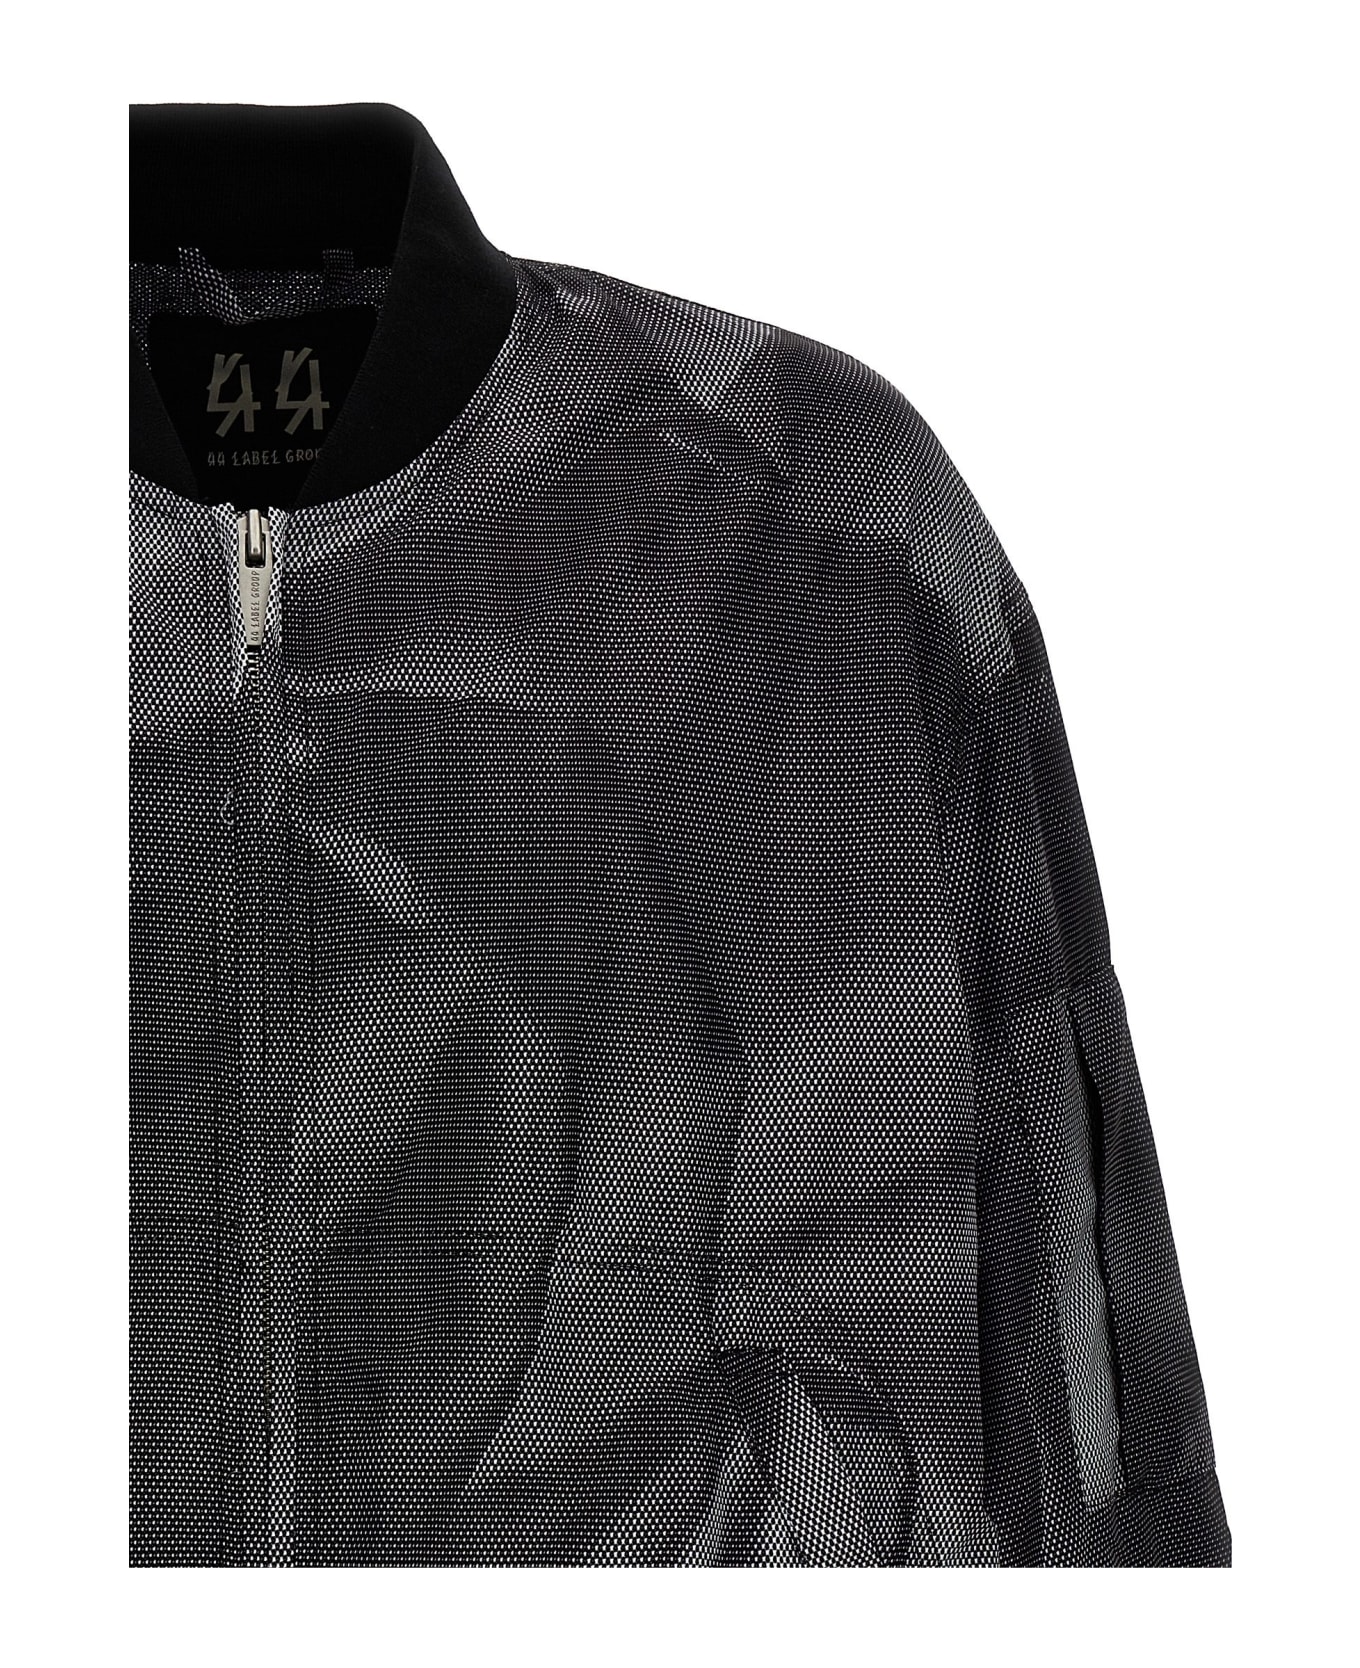 44 Label Group 'crinkle' Bomber Jacket Jacket - BLACK ジャケット